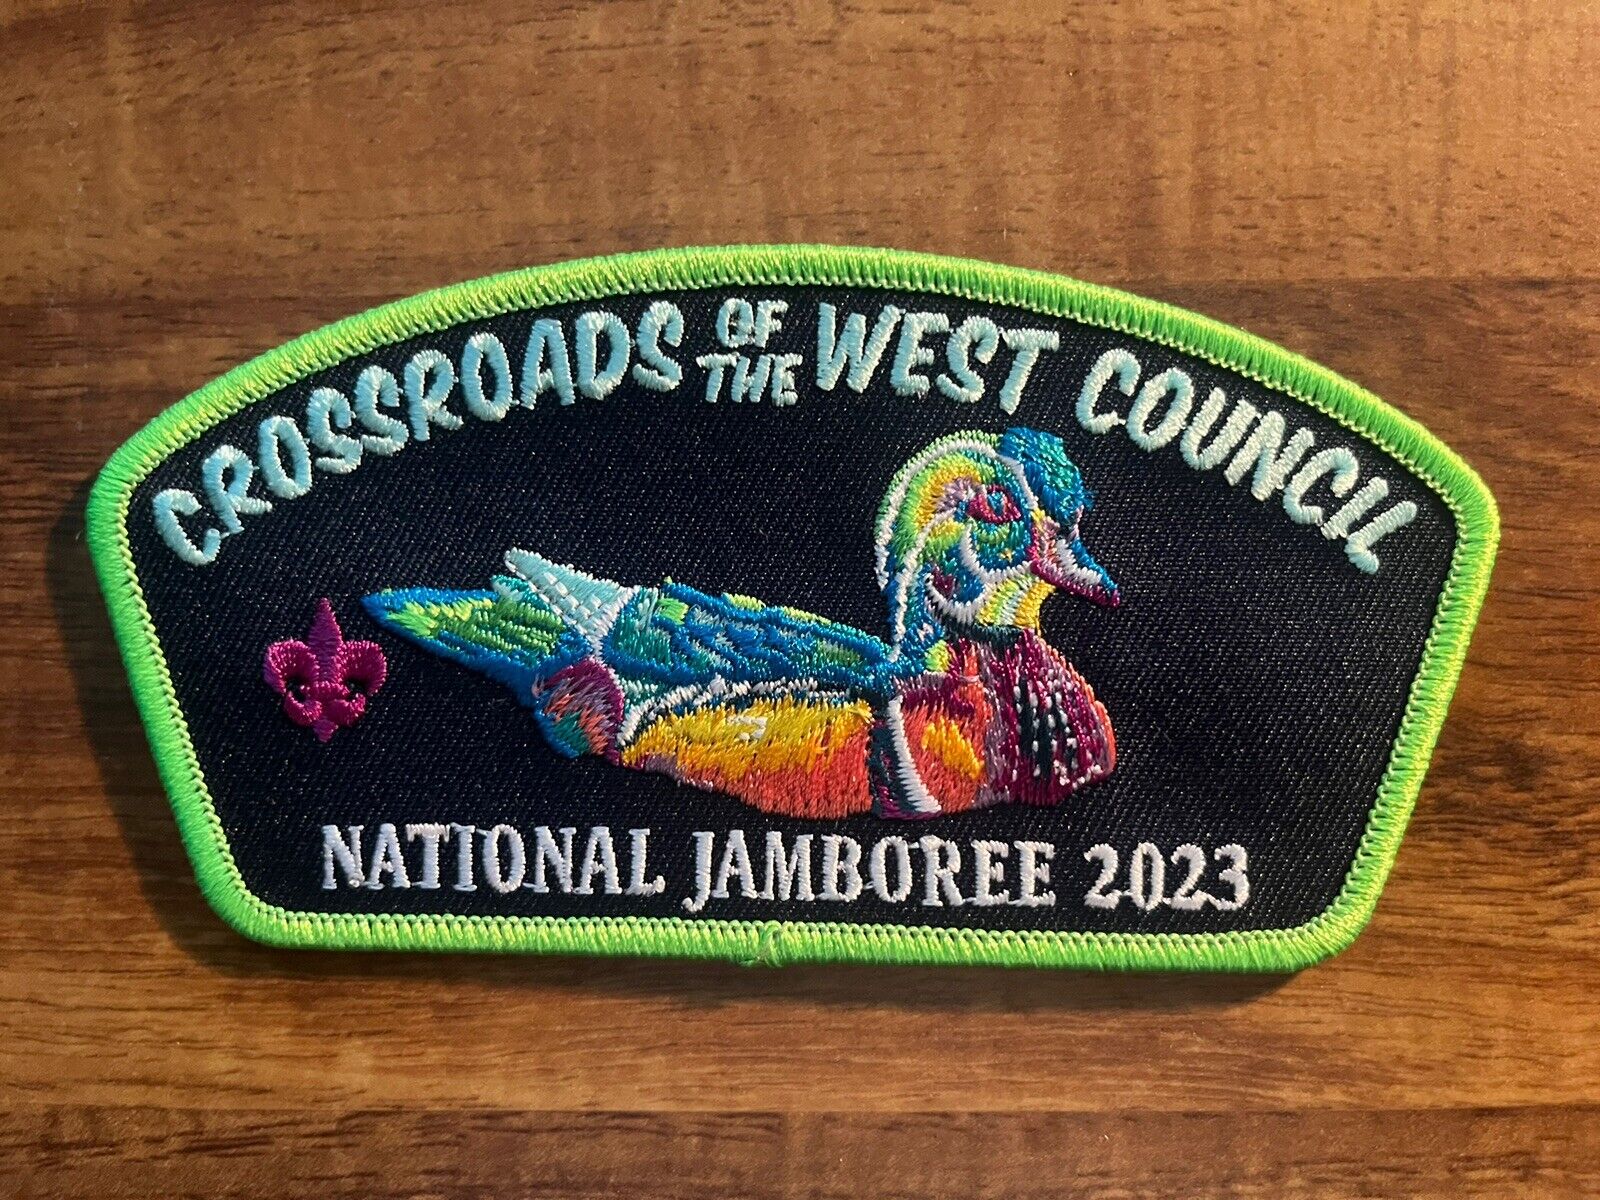 Crossroads Of The West Council National Jamboree 2023 JSP Wood Duck